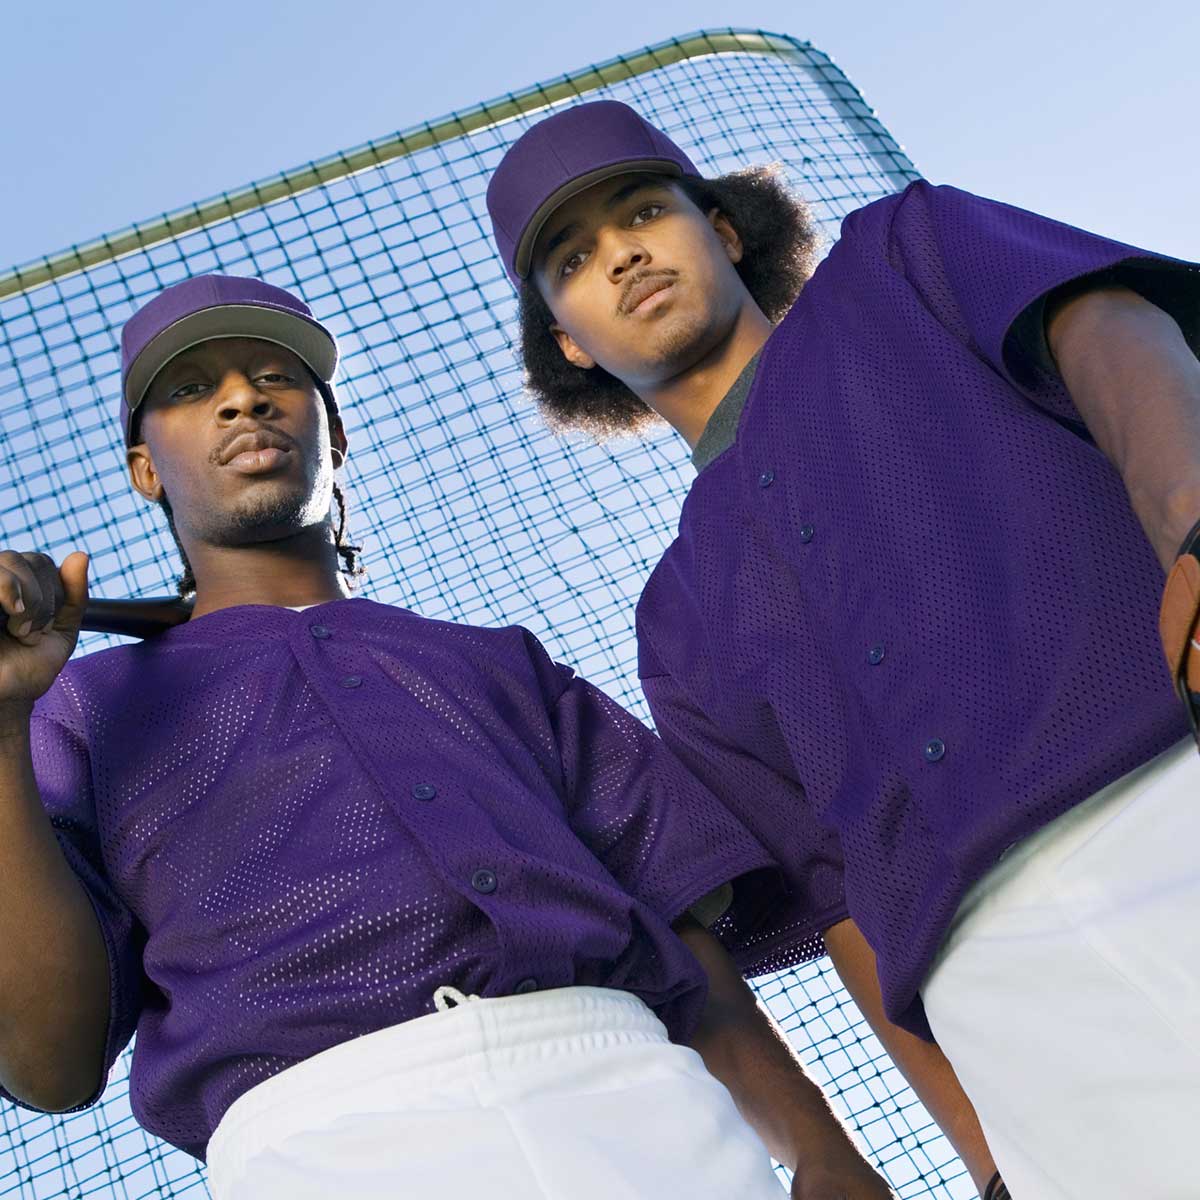 Baseball Caps Manufacturers in Gambia